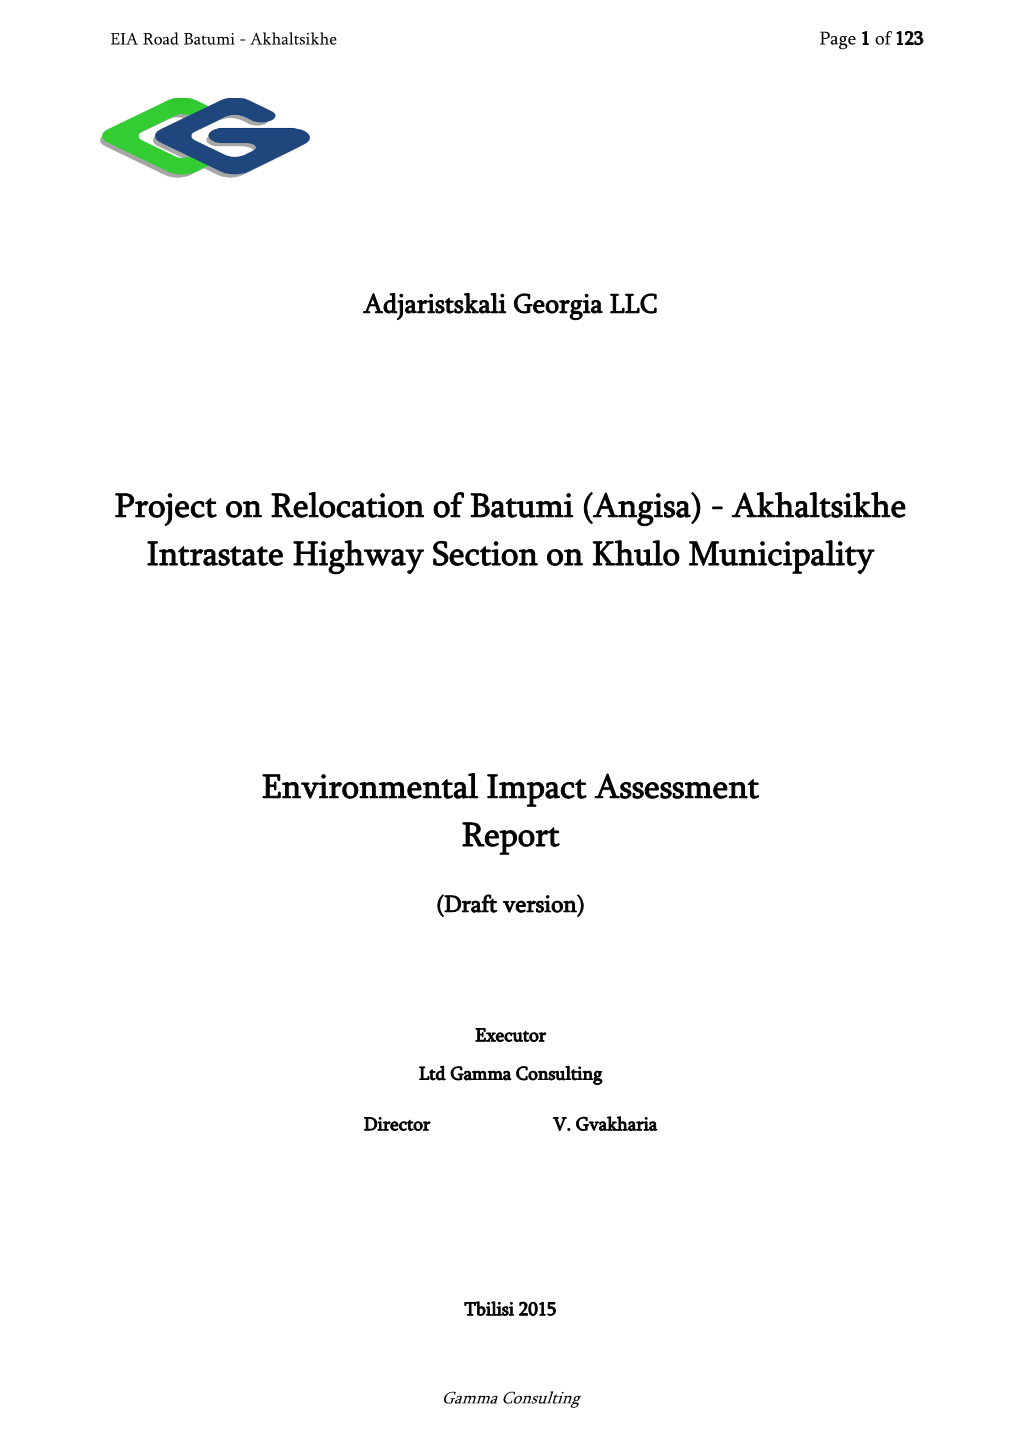 Environmental Impact Assessment Report of the Relocation of Batumi